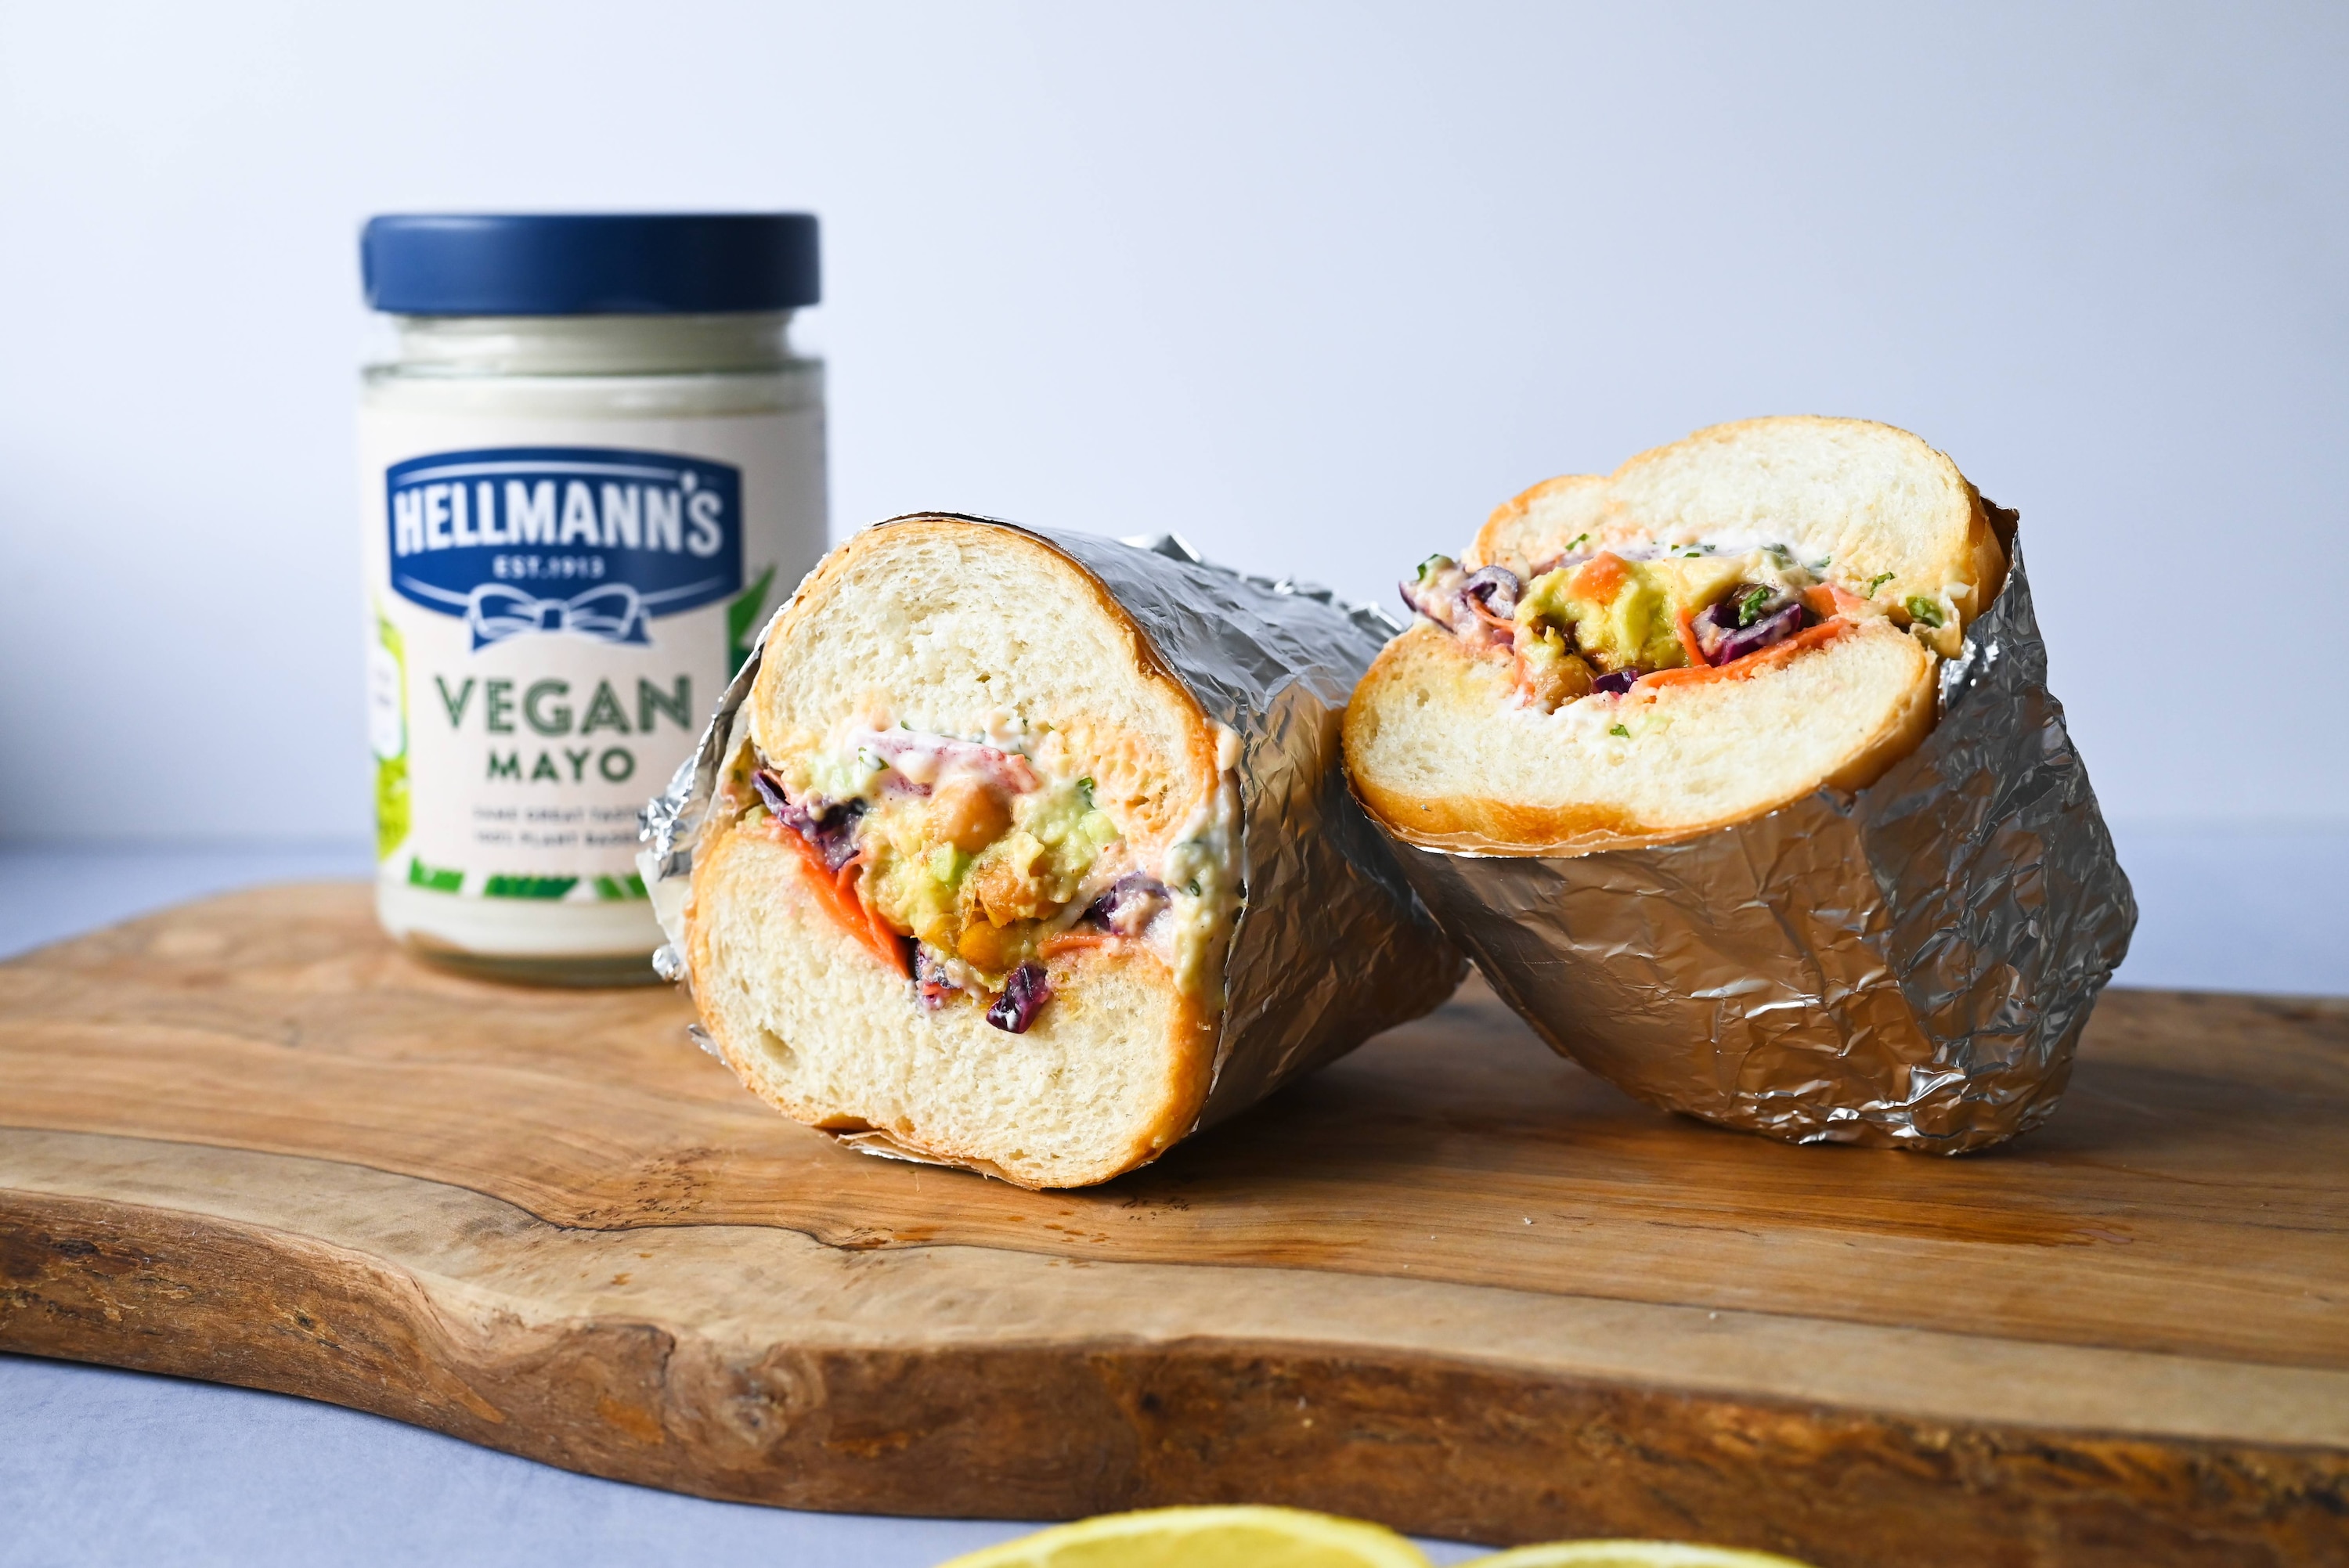 Hellmann's Vegan Sandwich